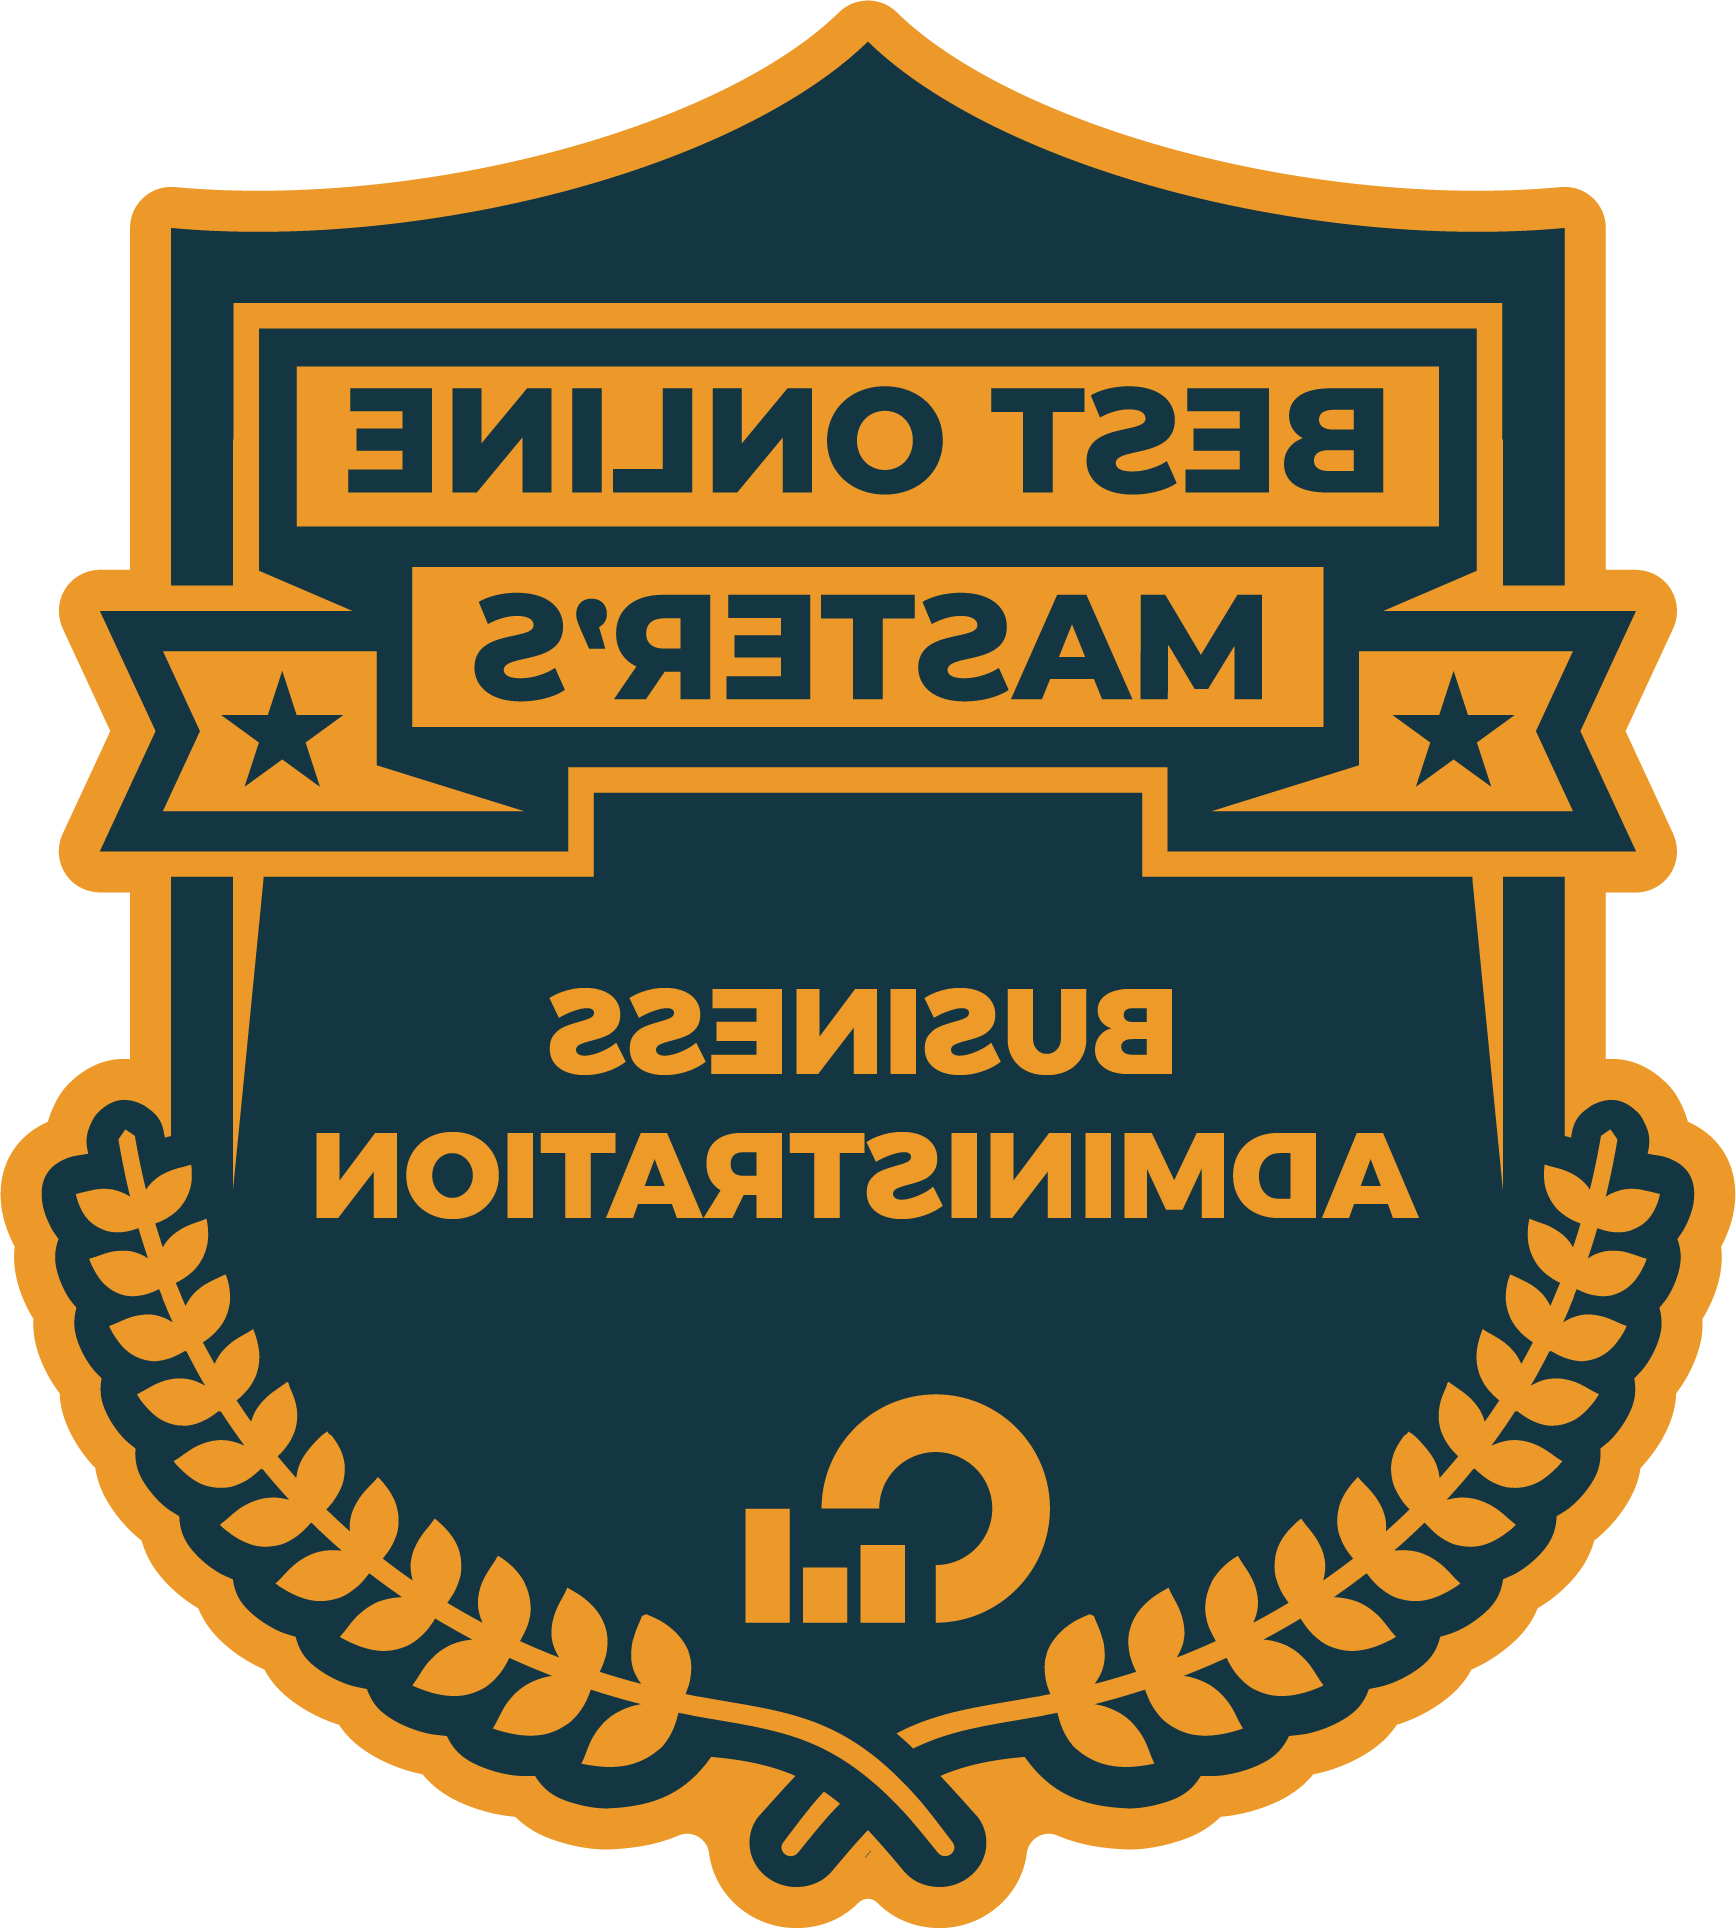 Best Online Master's Badge